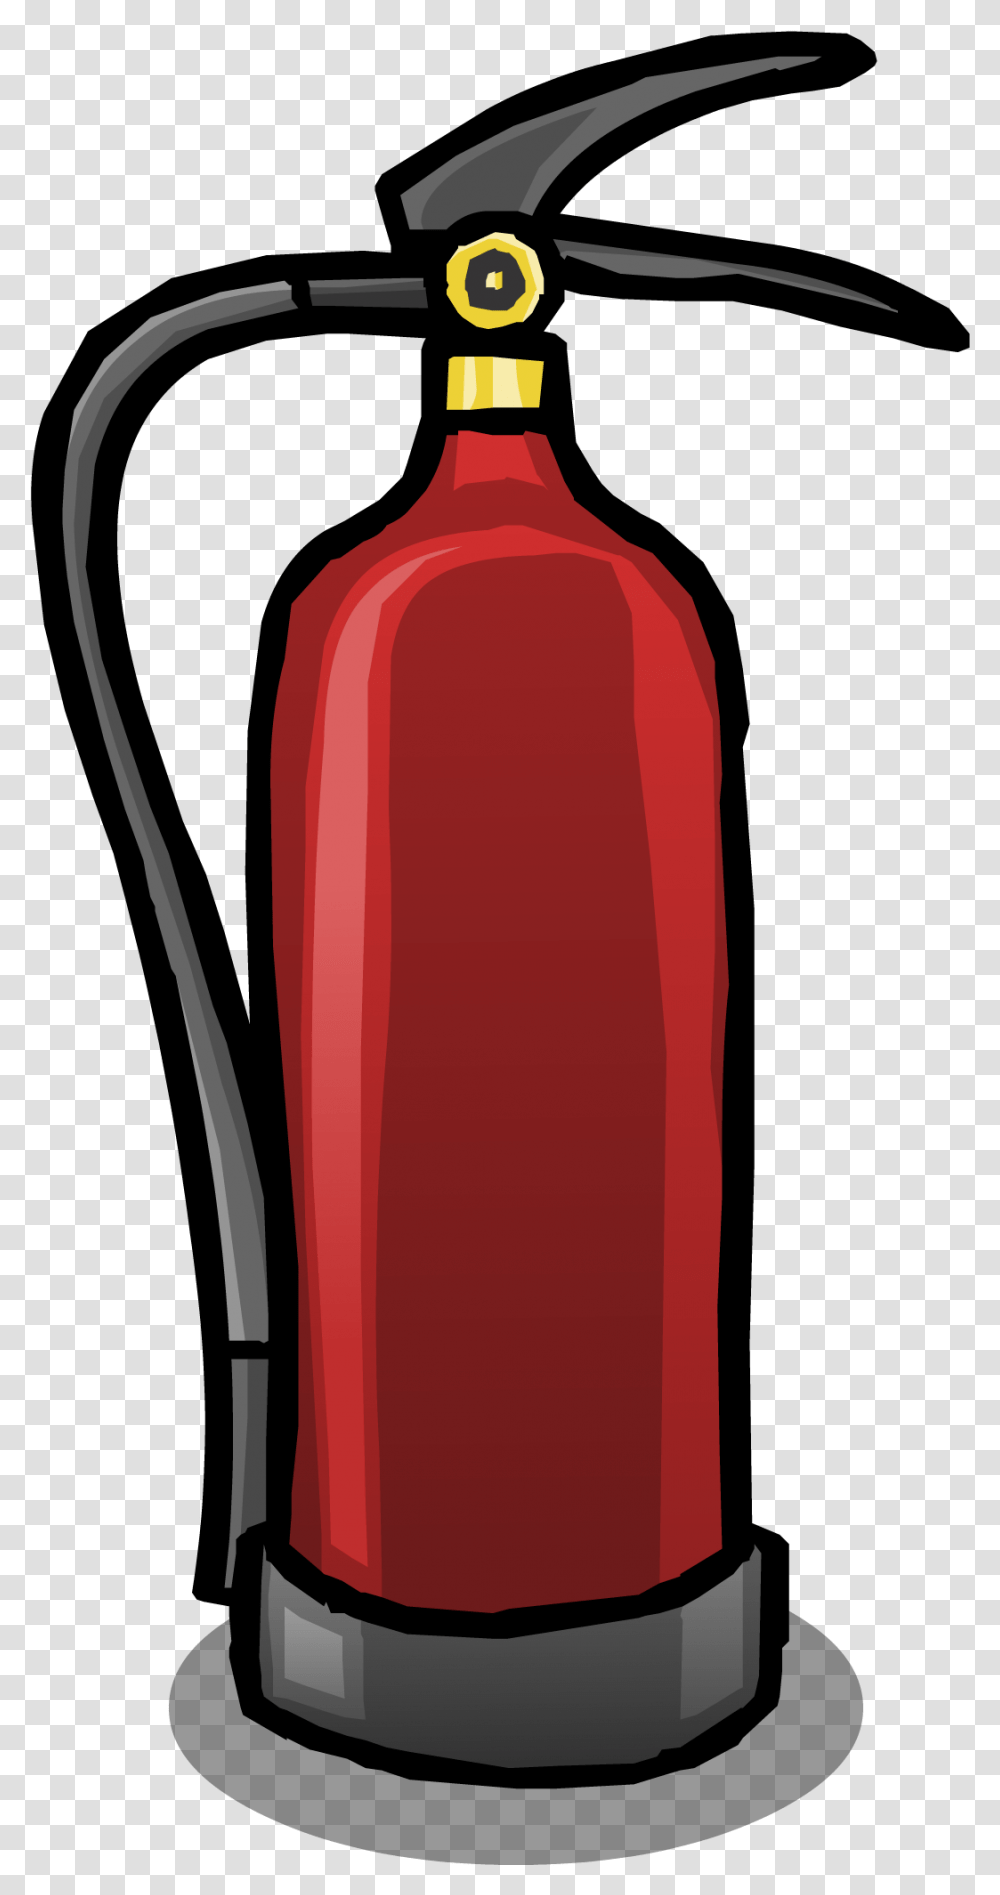 Download Fire Extinguisher Sprite 001 Fire Extinguisher Sprite, Appliance, Bottle, Ketchup, Food Transparent Png